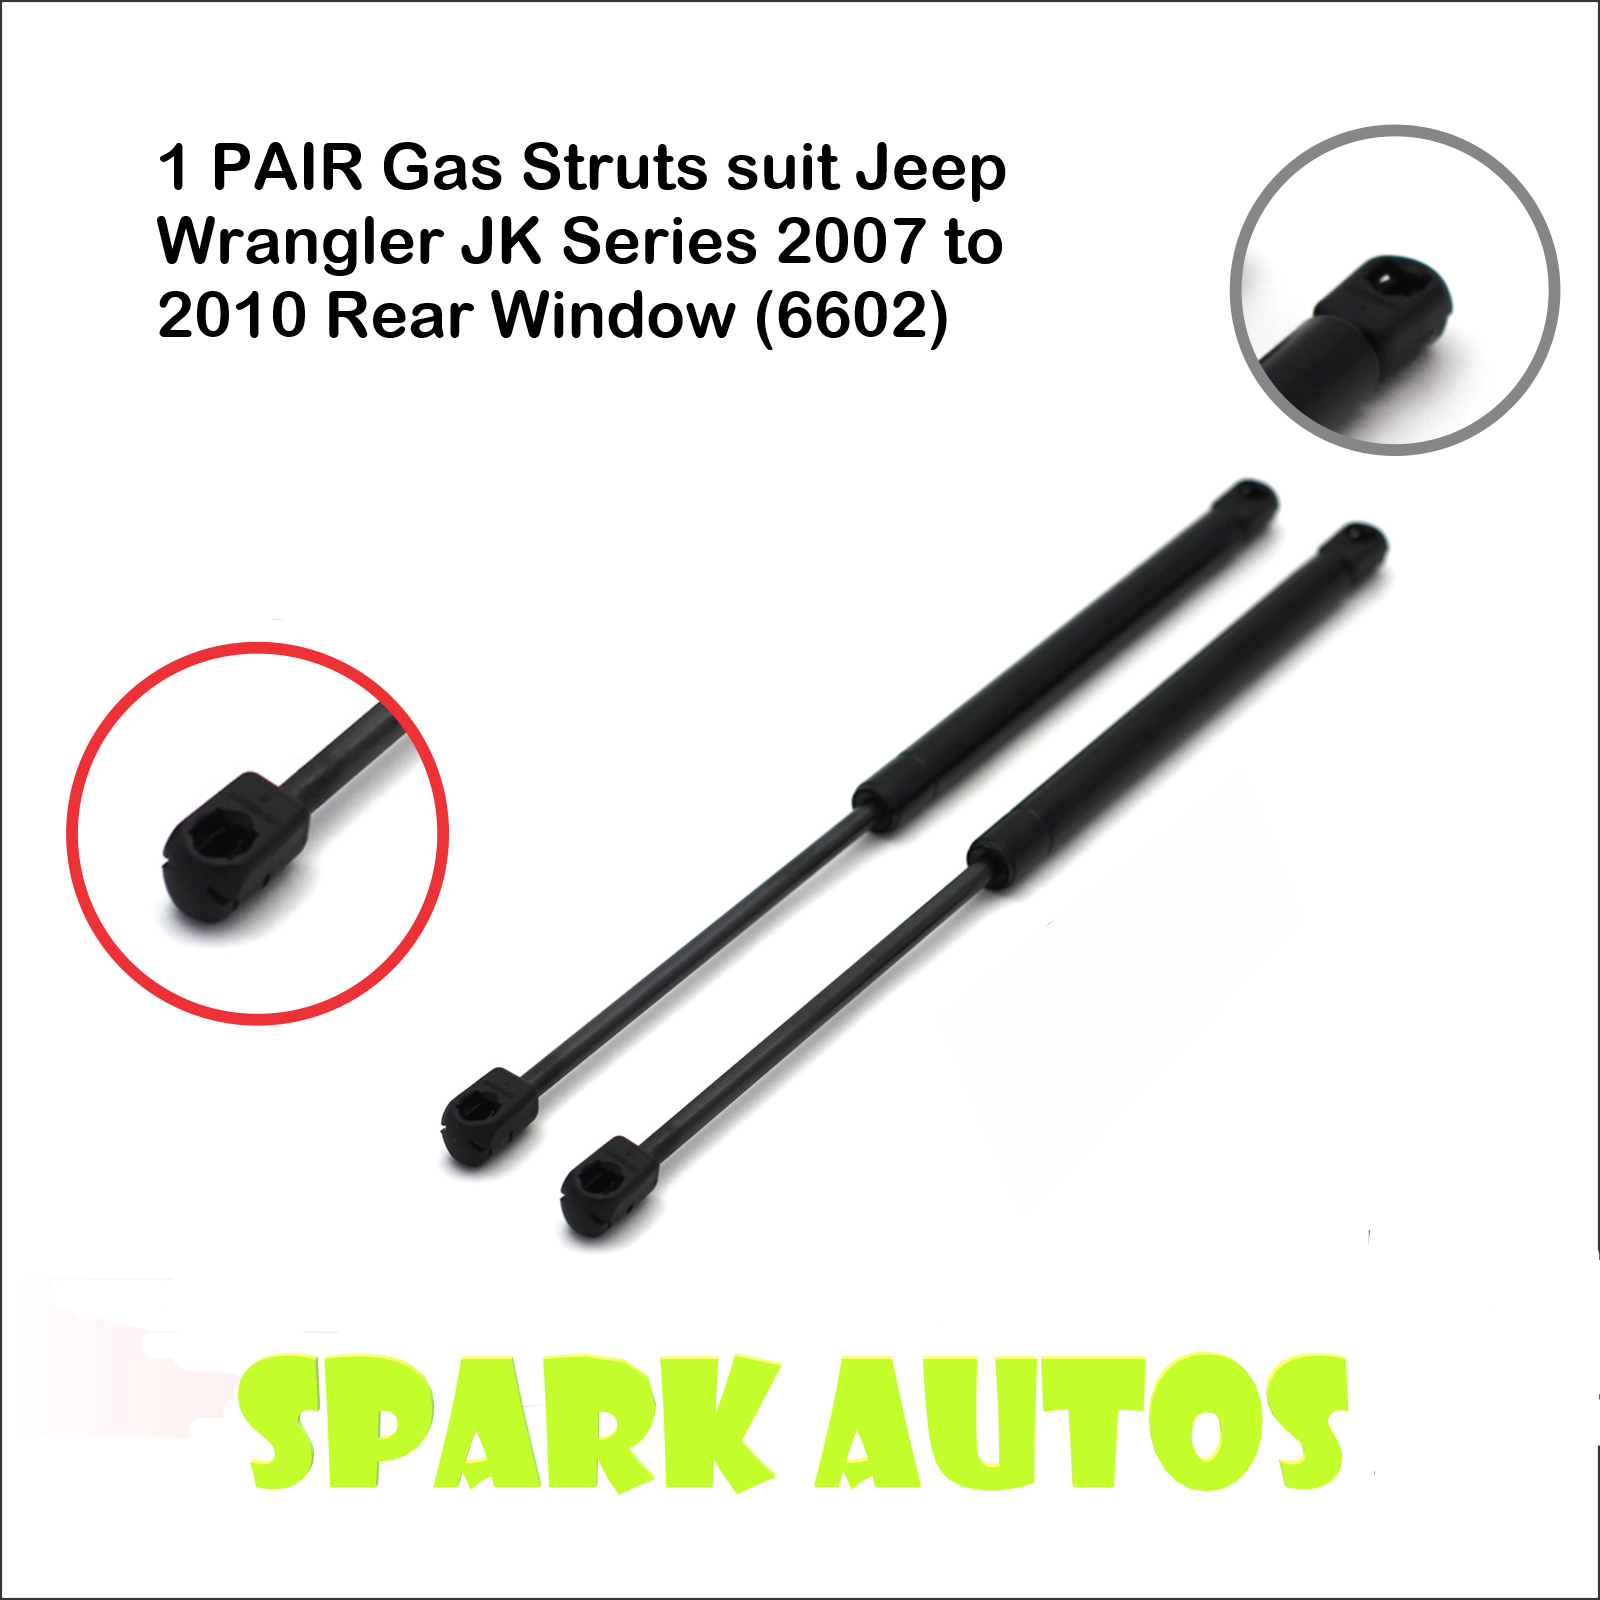 1 PAIR Gas Struts suit Jeep Wrangler JK Series Rear Window (6602) gas stays  lift supports - Kapco